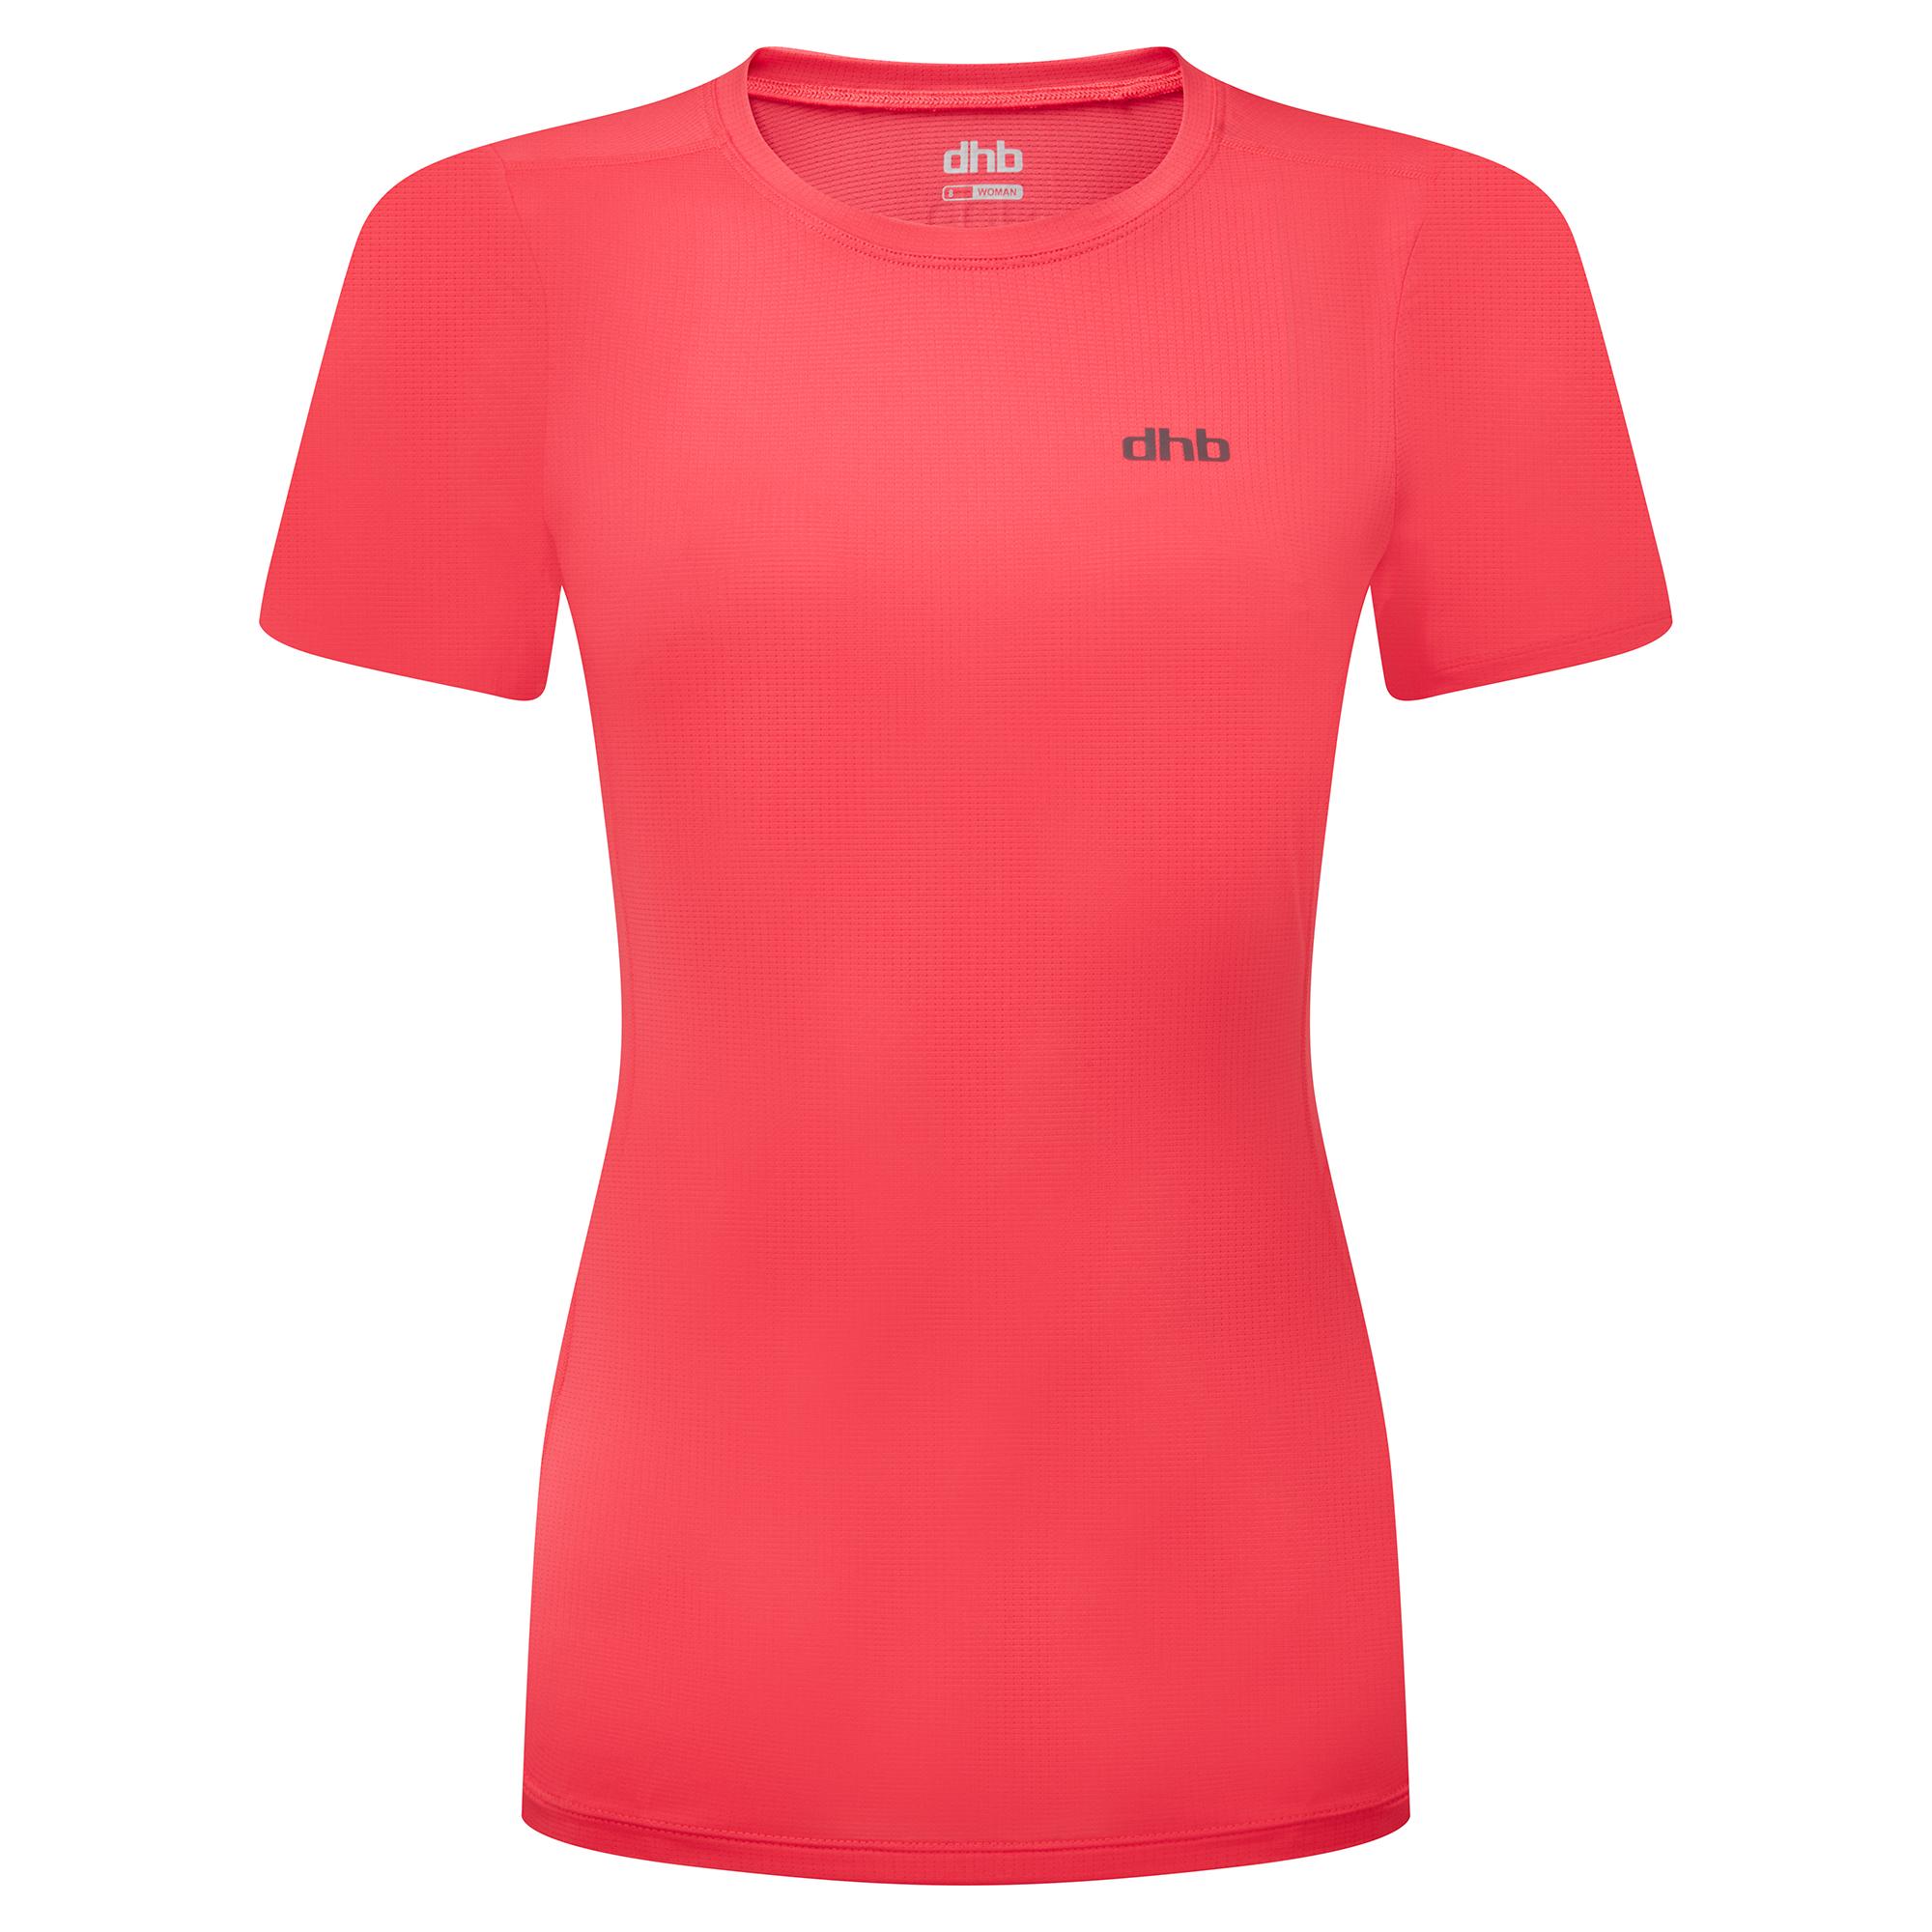 Dhb Aeron Ultra Womens Run Short Sleeve Top - Pink